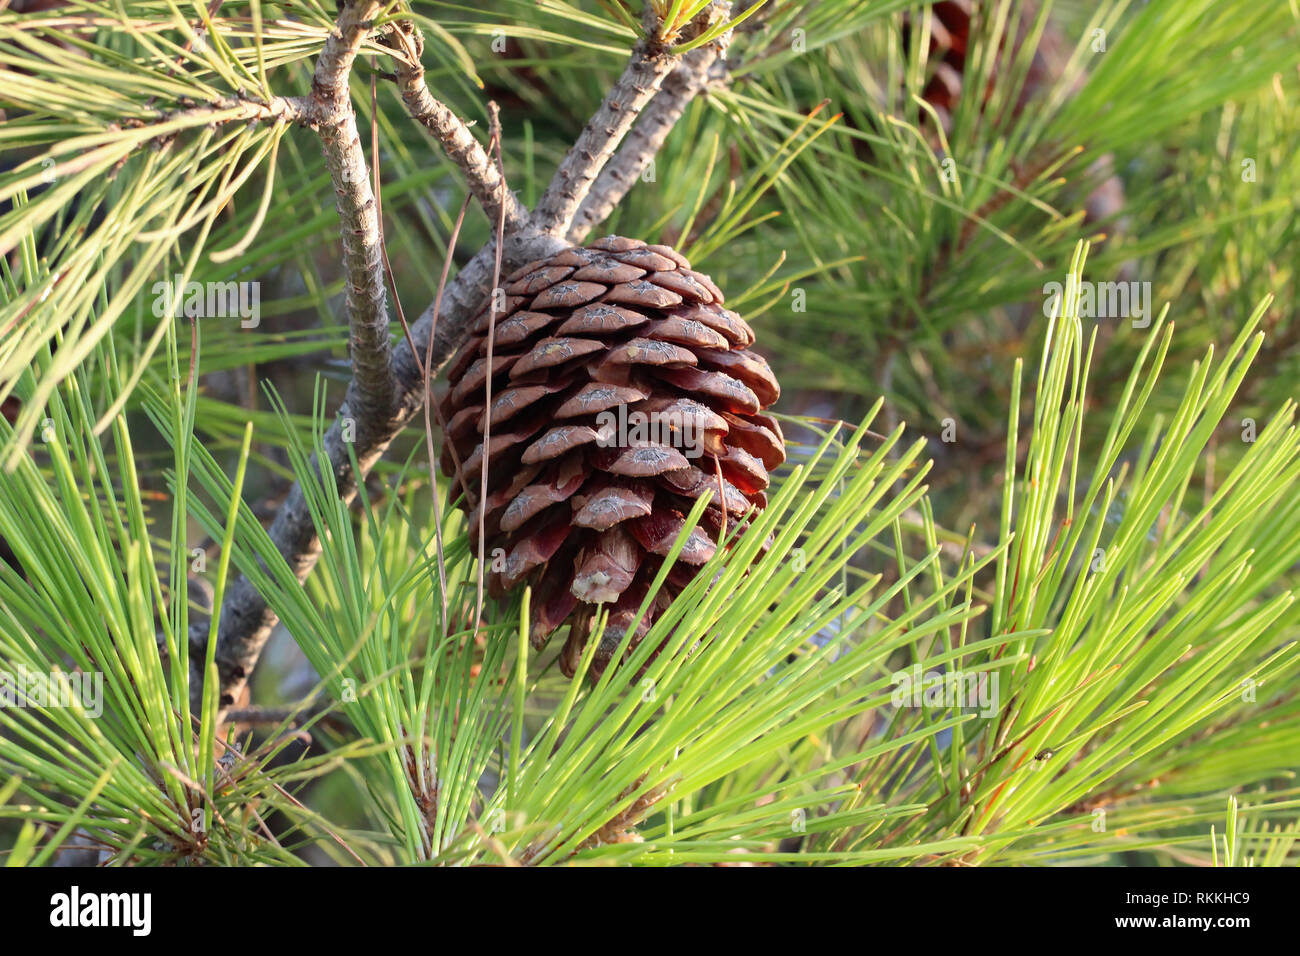 Pine Tree Branch With Stone Pine Cones Stock Photo